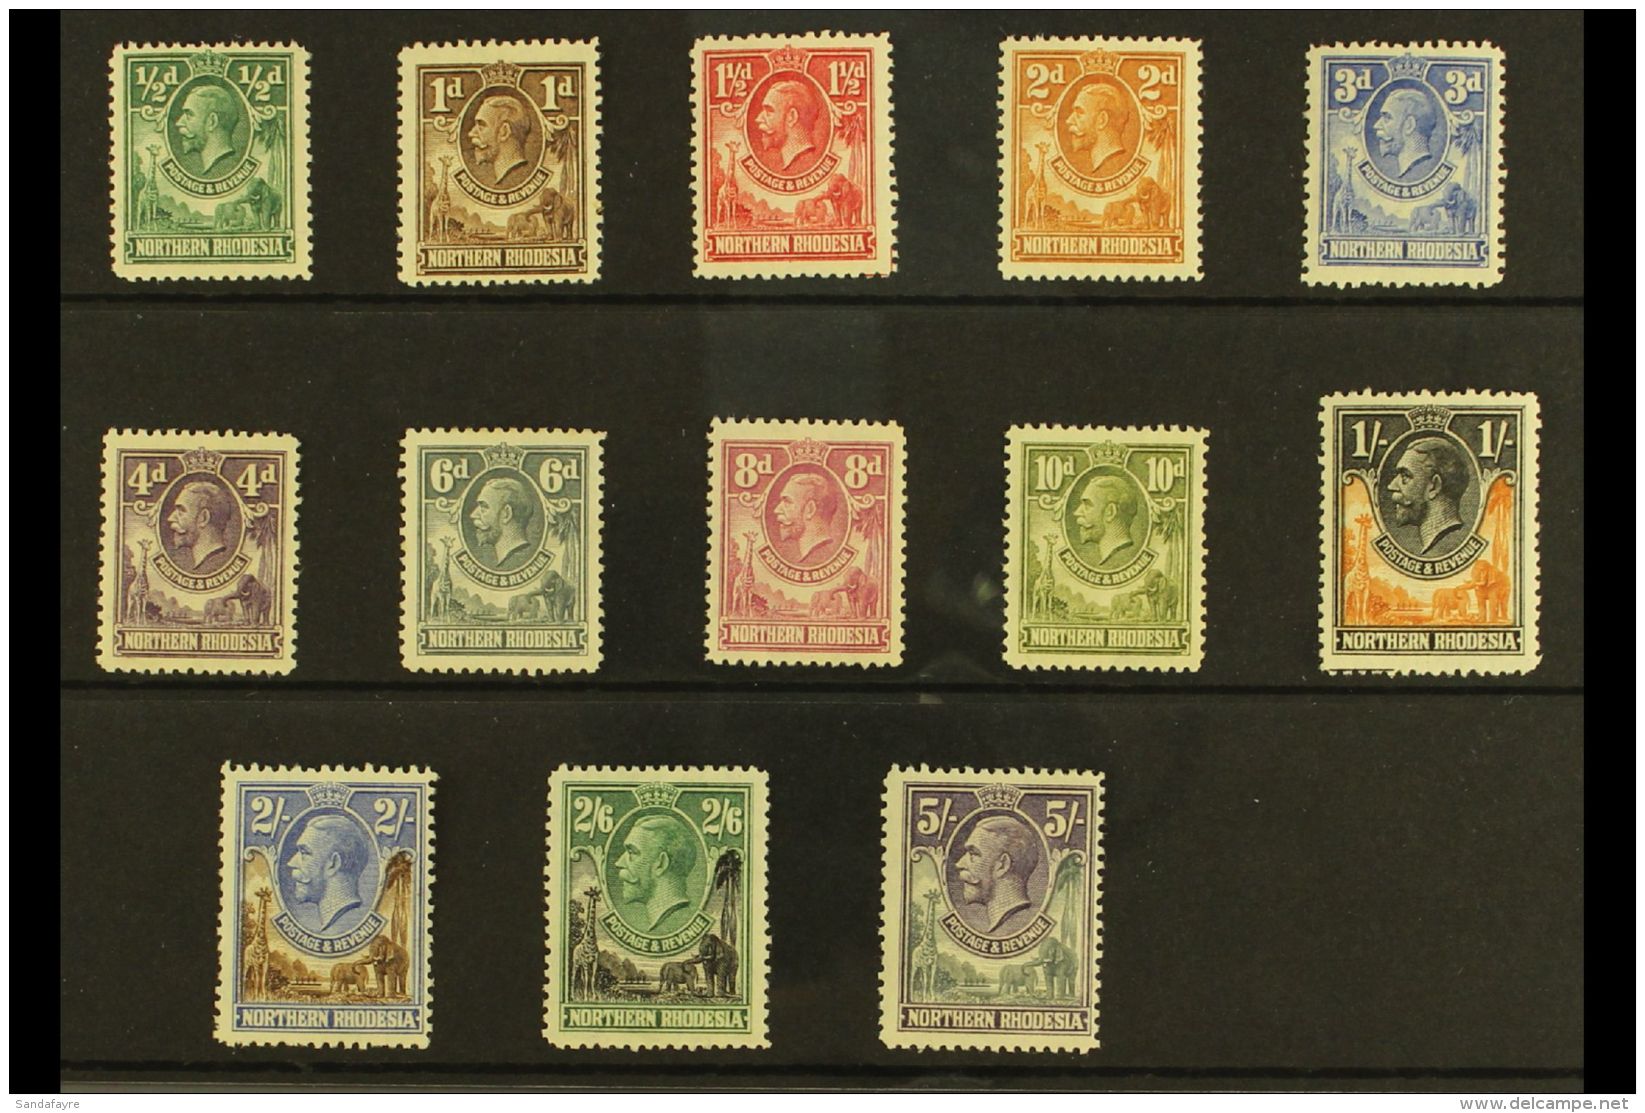 1925-29 KGV Definitive Set To 2s6d (SG 1/12), Plus 5s (SG 14), Fine Fresh Mint. (13 Stamps) For More Images,... - Rhodésie Du Nord (...-1963)